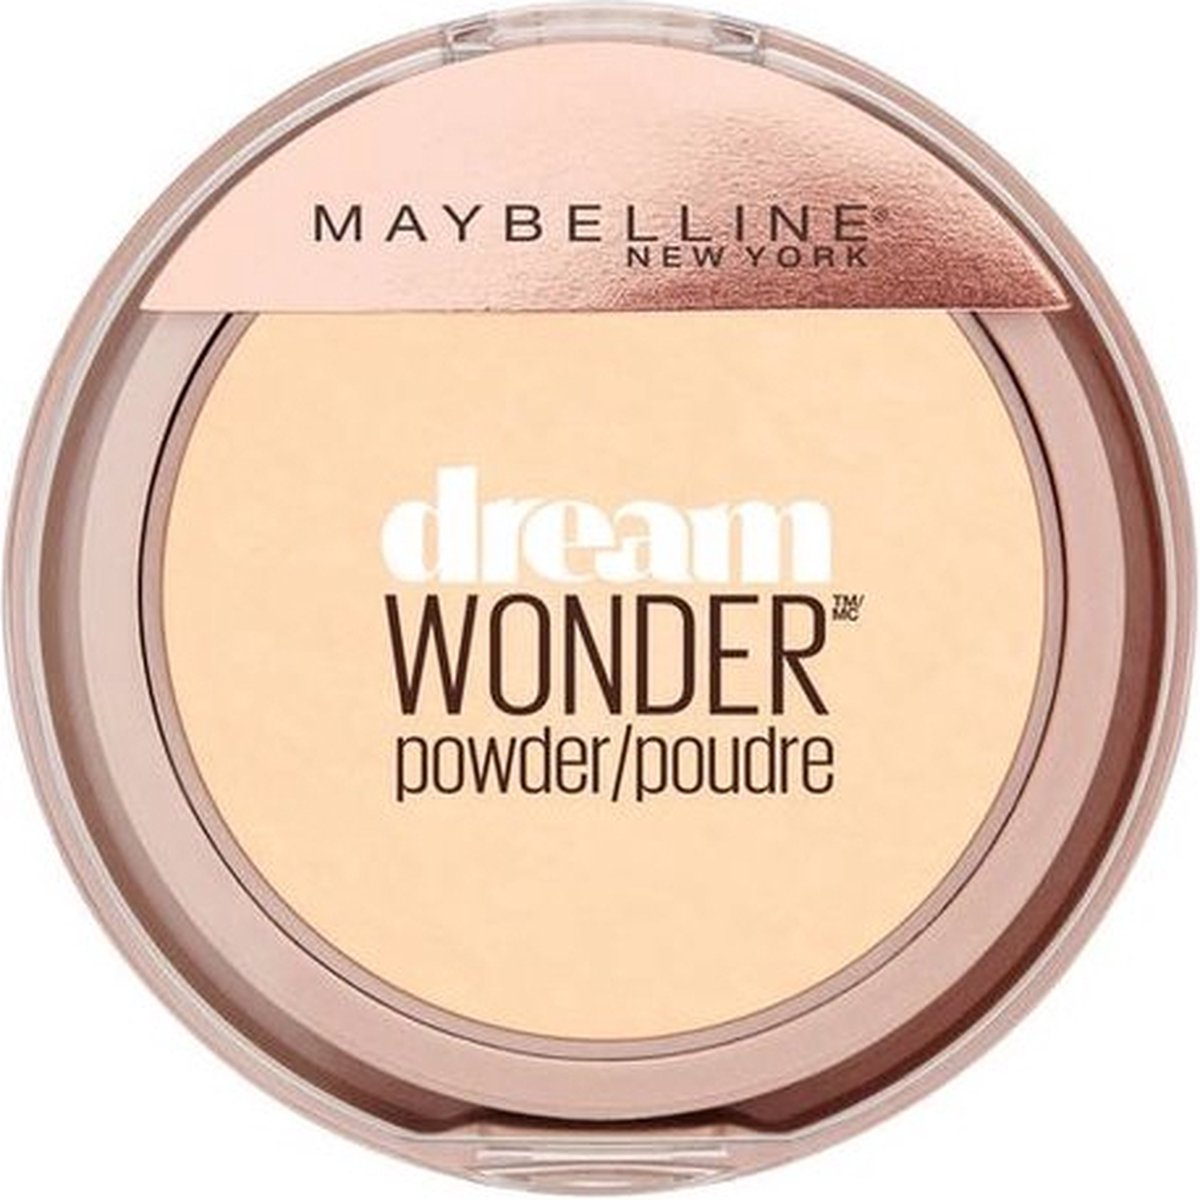 Maybelline Dream Wonder Powder - 15 Ivory - Maybelline